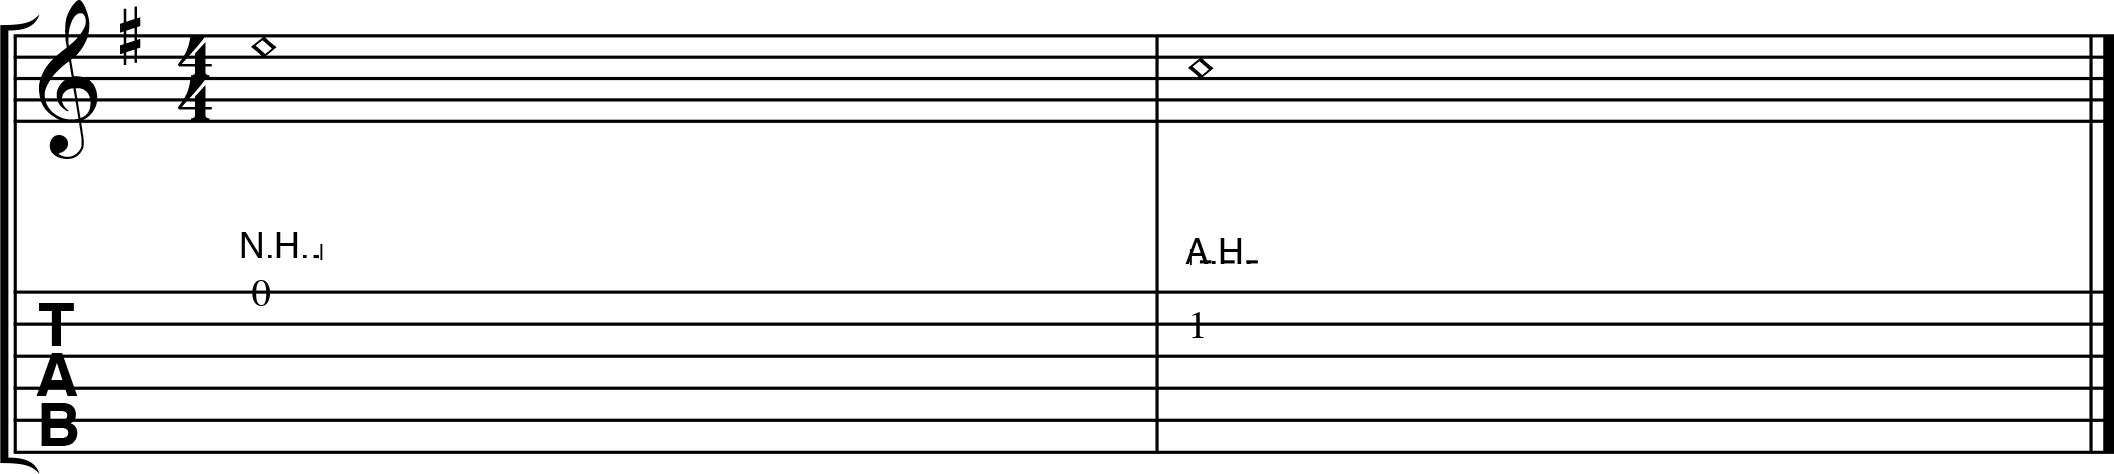 Artificial harmonics notation.